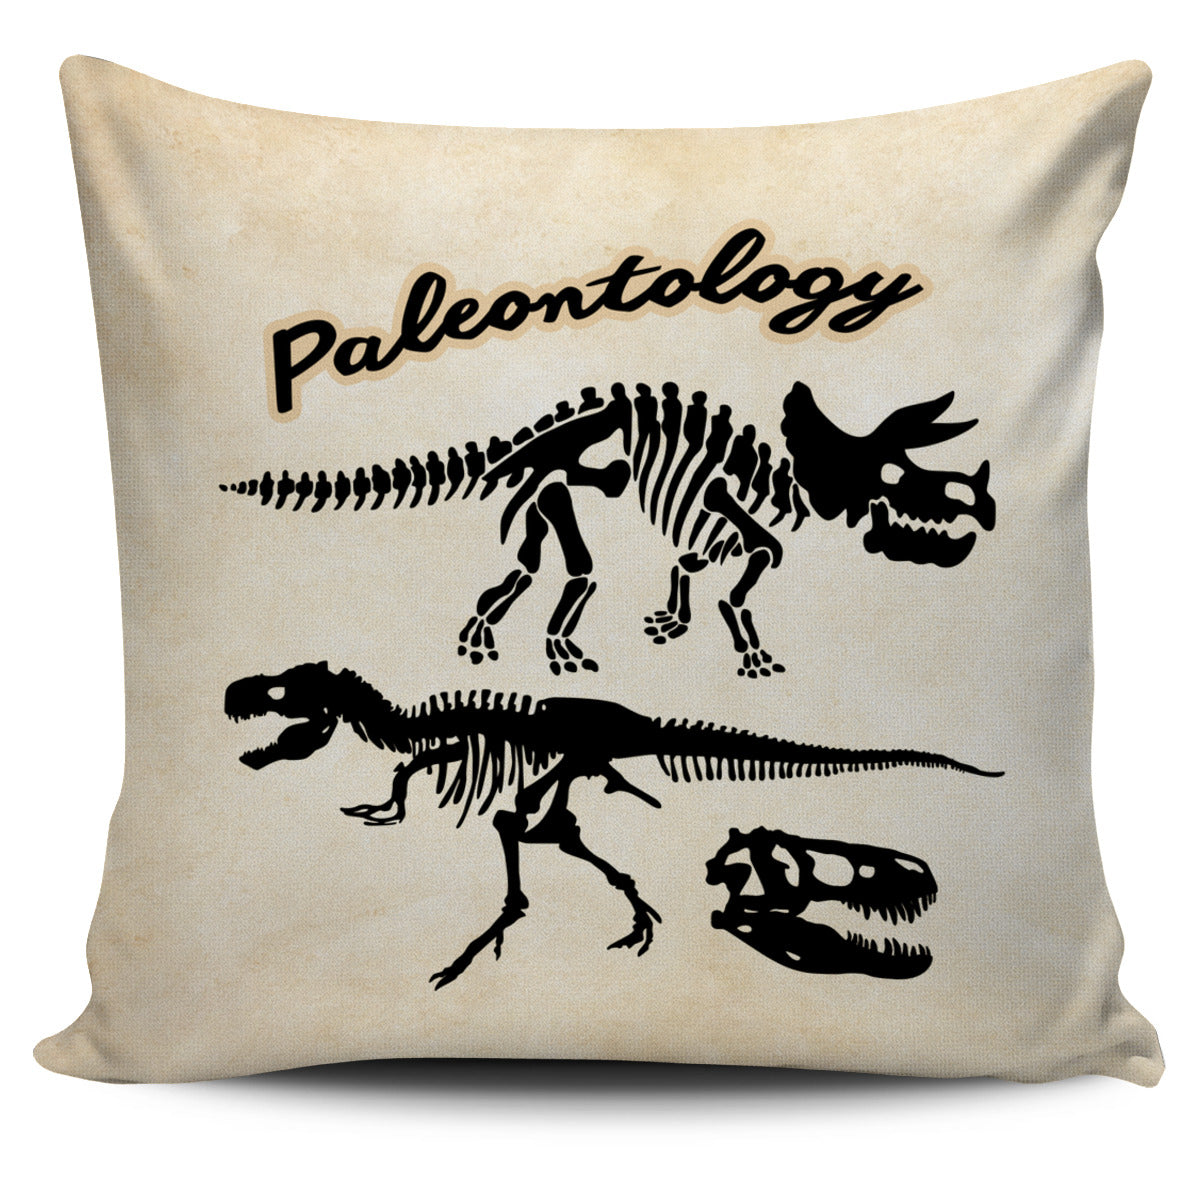 Paleontology Dinosaur Fossil Pillow Cover